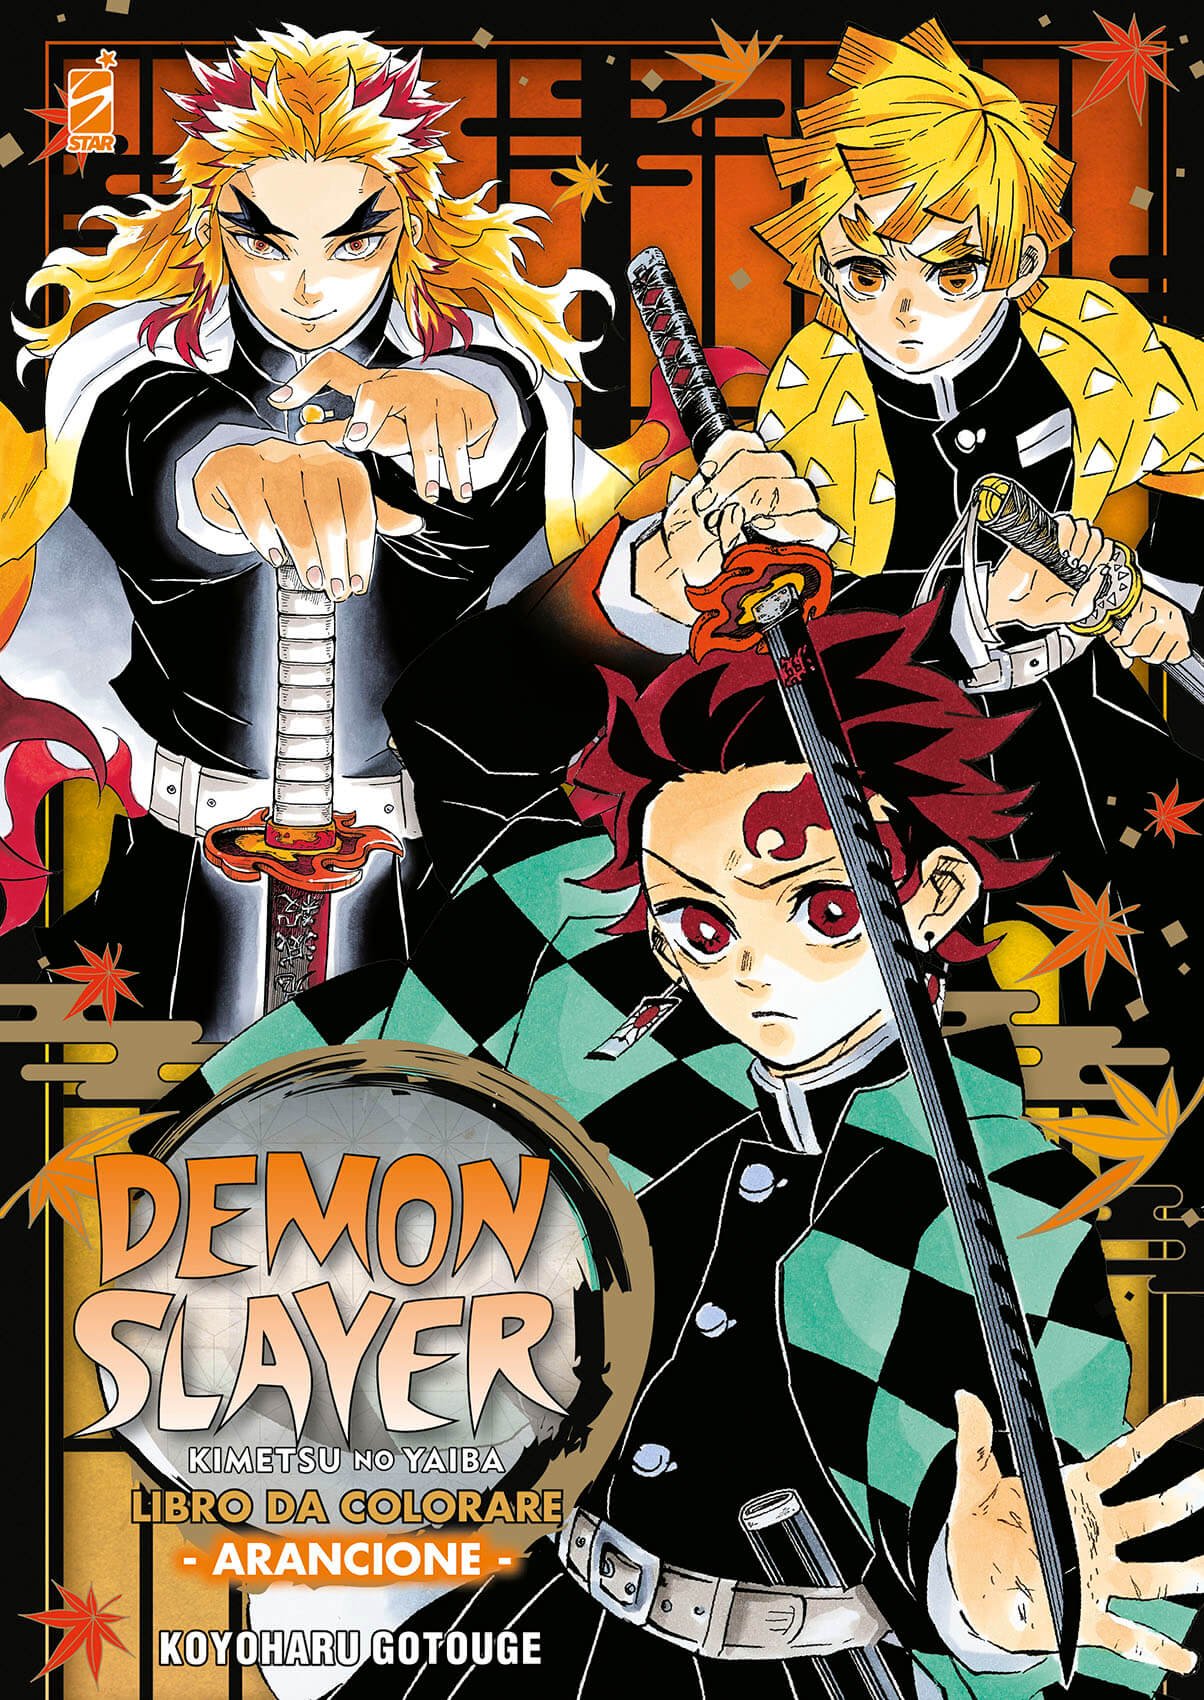 Demon Slayer - Kimetsu No Yaiba Colouring Book 3, parmi les sorties mangas Star Comics du 29 mars 2023.